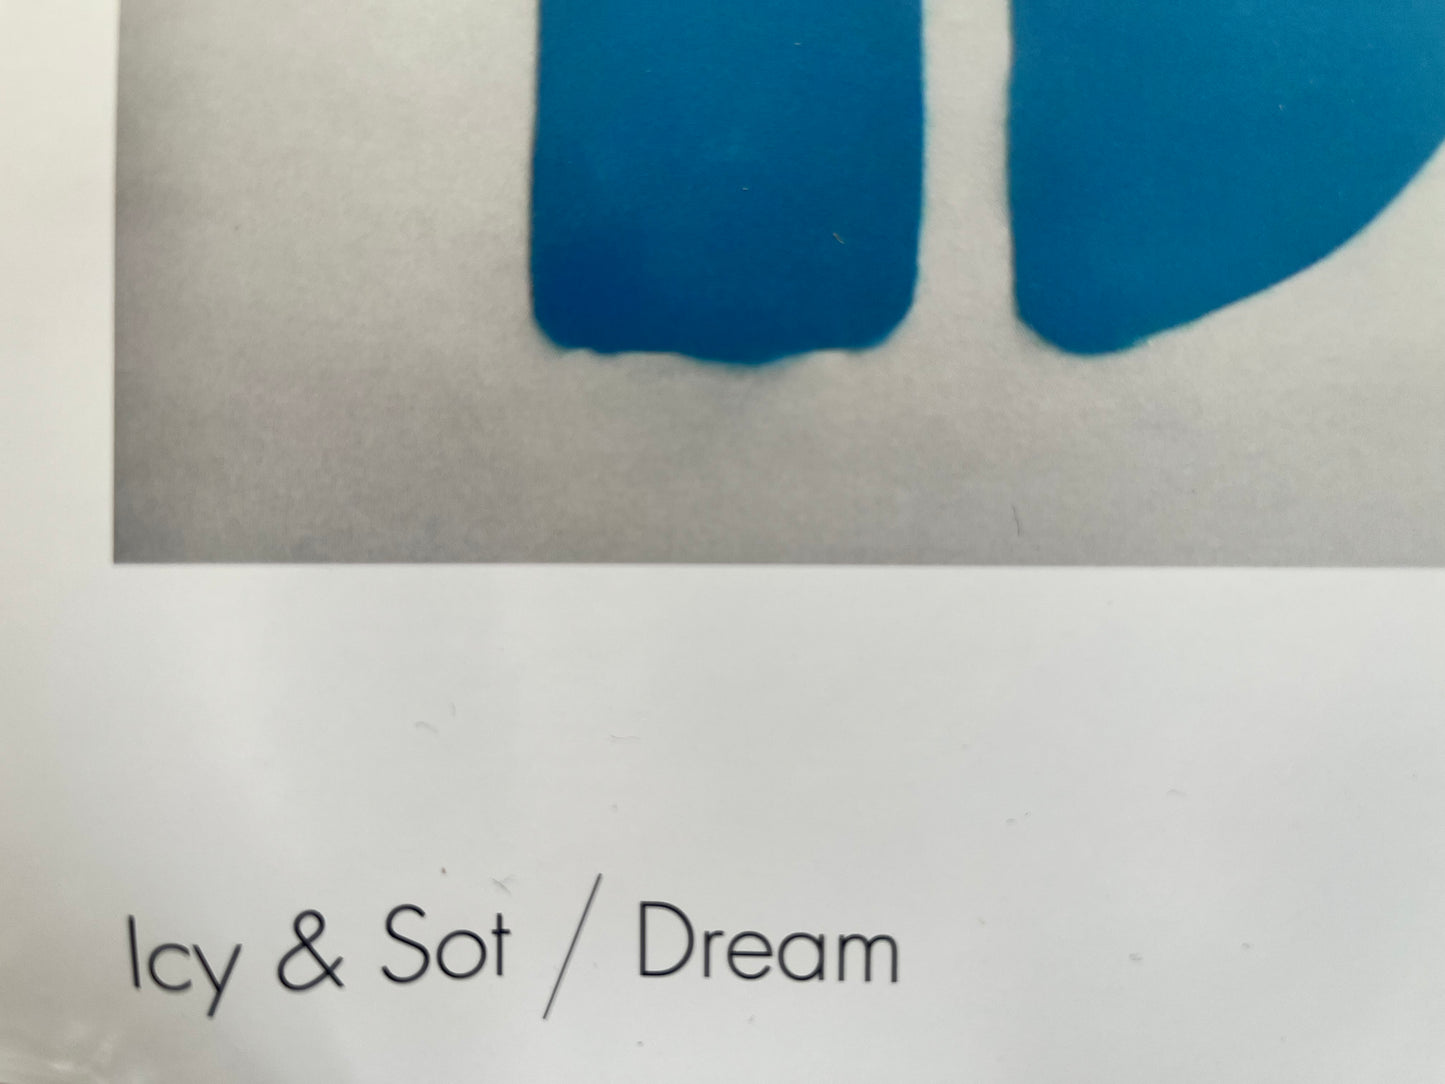 Serigrafía offset - Icy & Sot x MocoMuseum - Dream